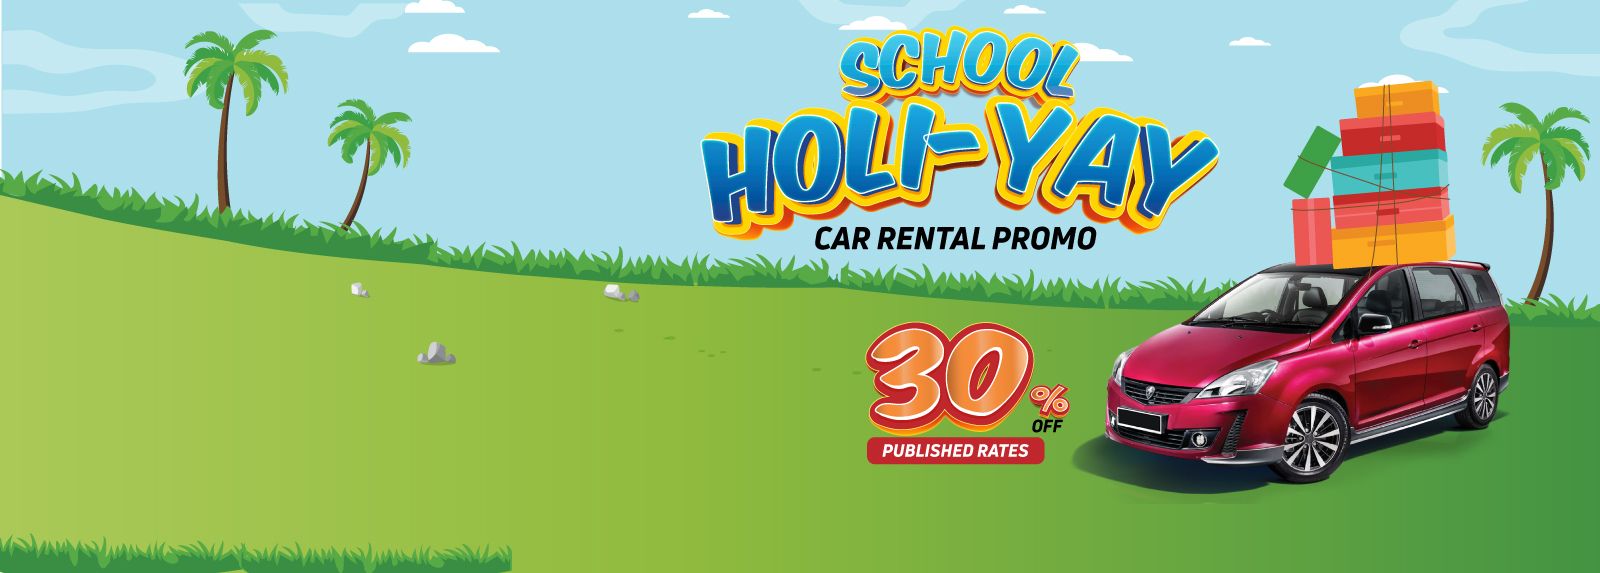 School Holi-Yay Promotion